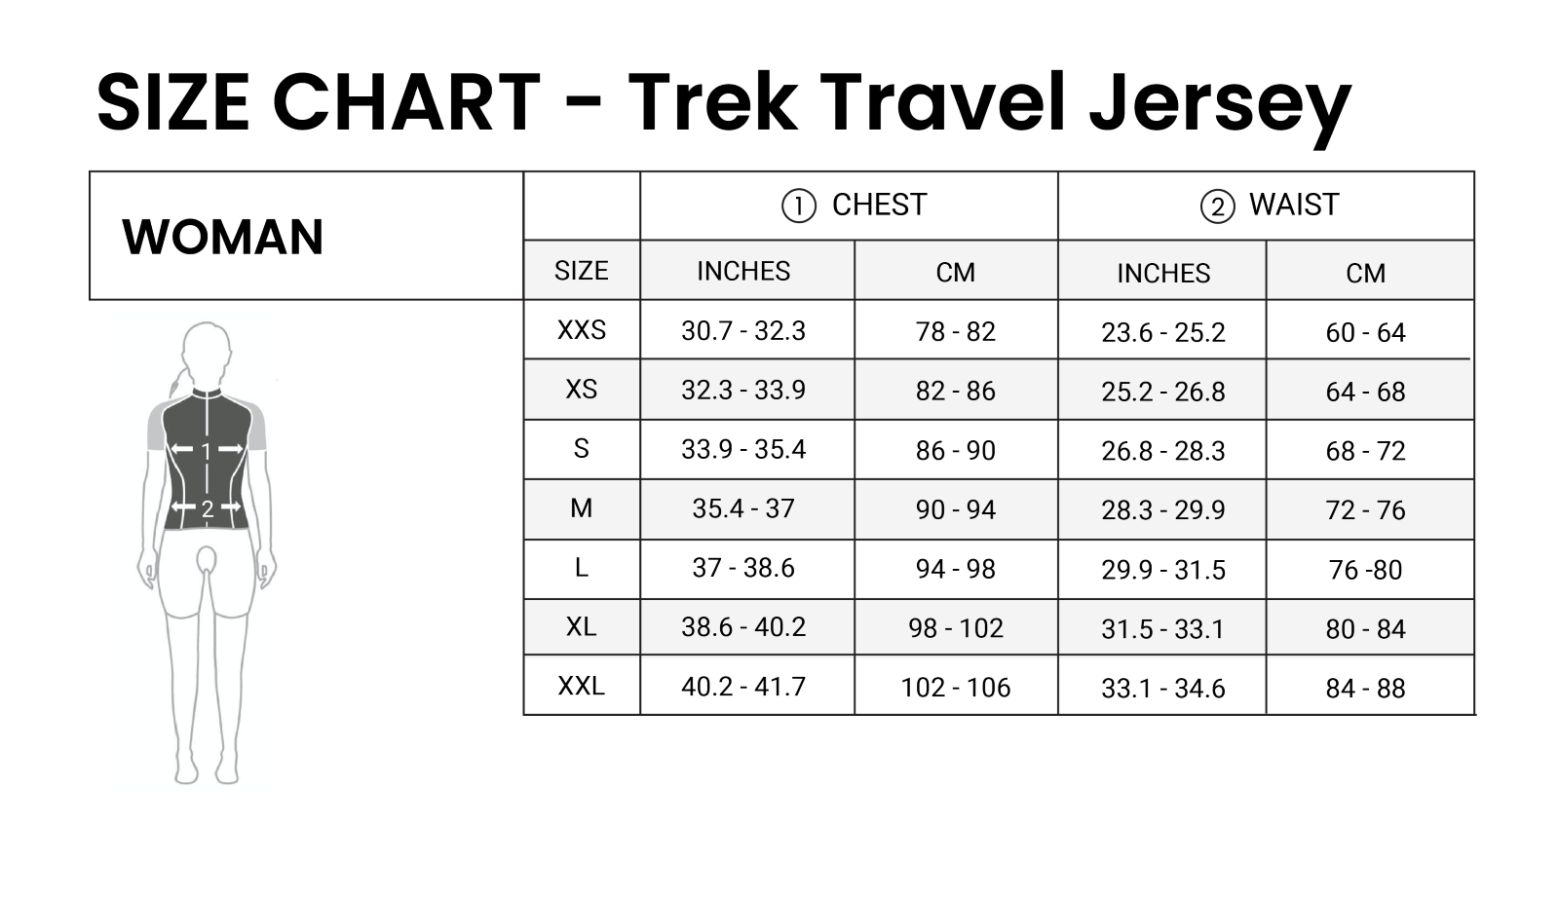 Trek Travel Jersey Sizing Chart